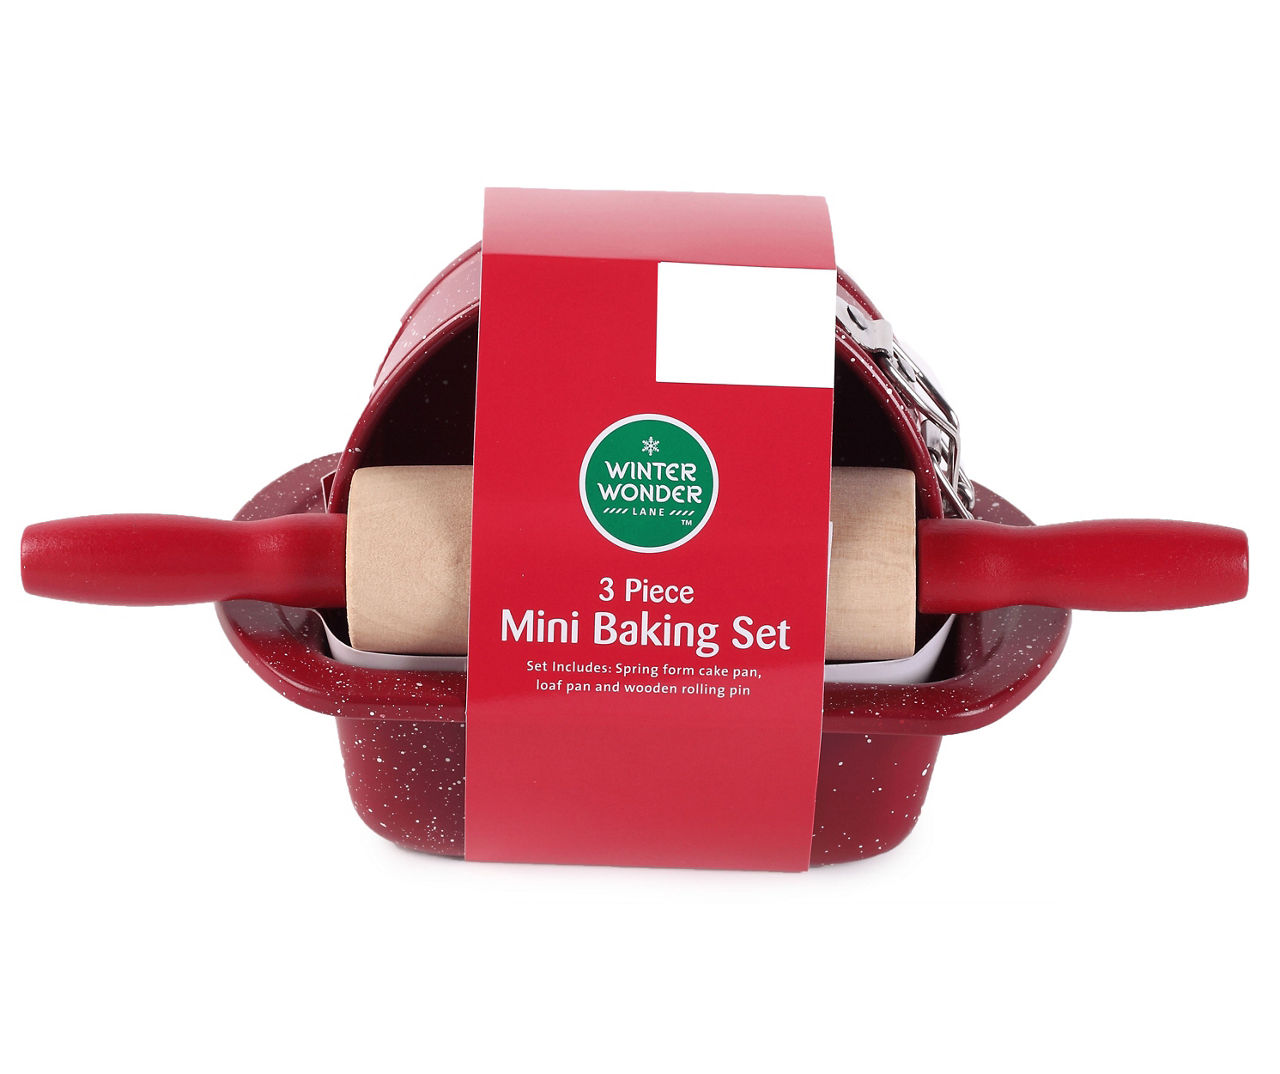 Cook's Tools 3 Piece Bake and Take Set - Red Merry Christmas Ya'll Print